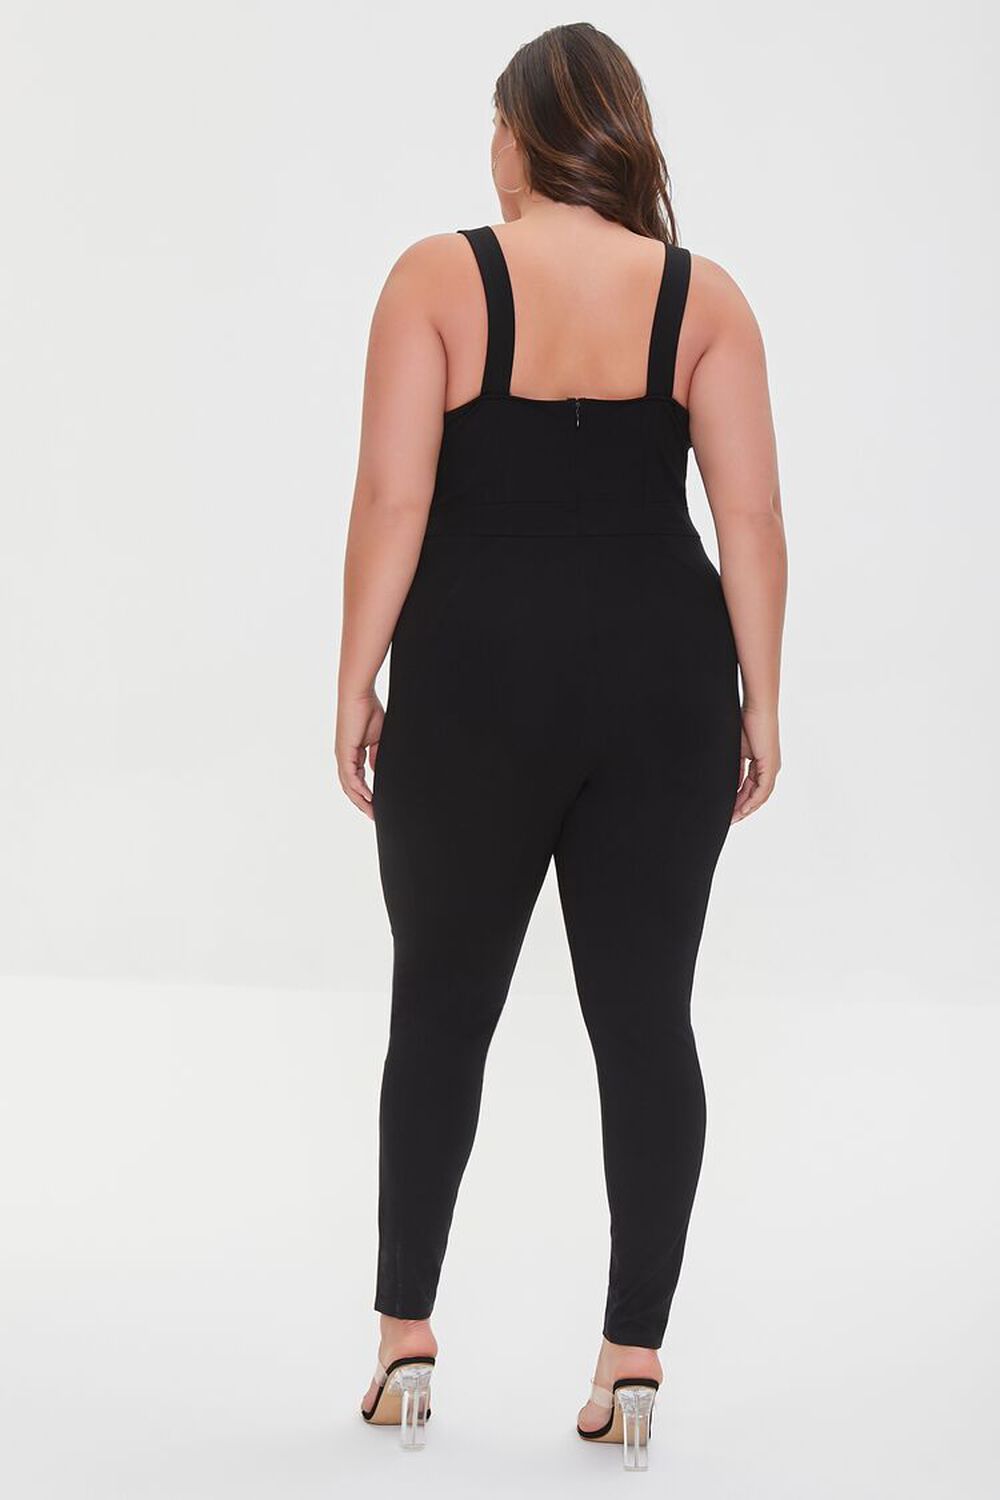 BLACK Plus Size Denim Sweetheart Jumpsuit, image 3